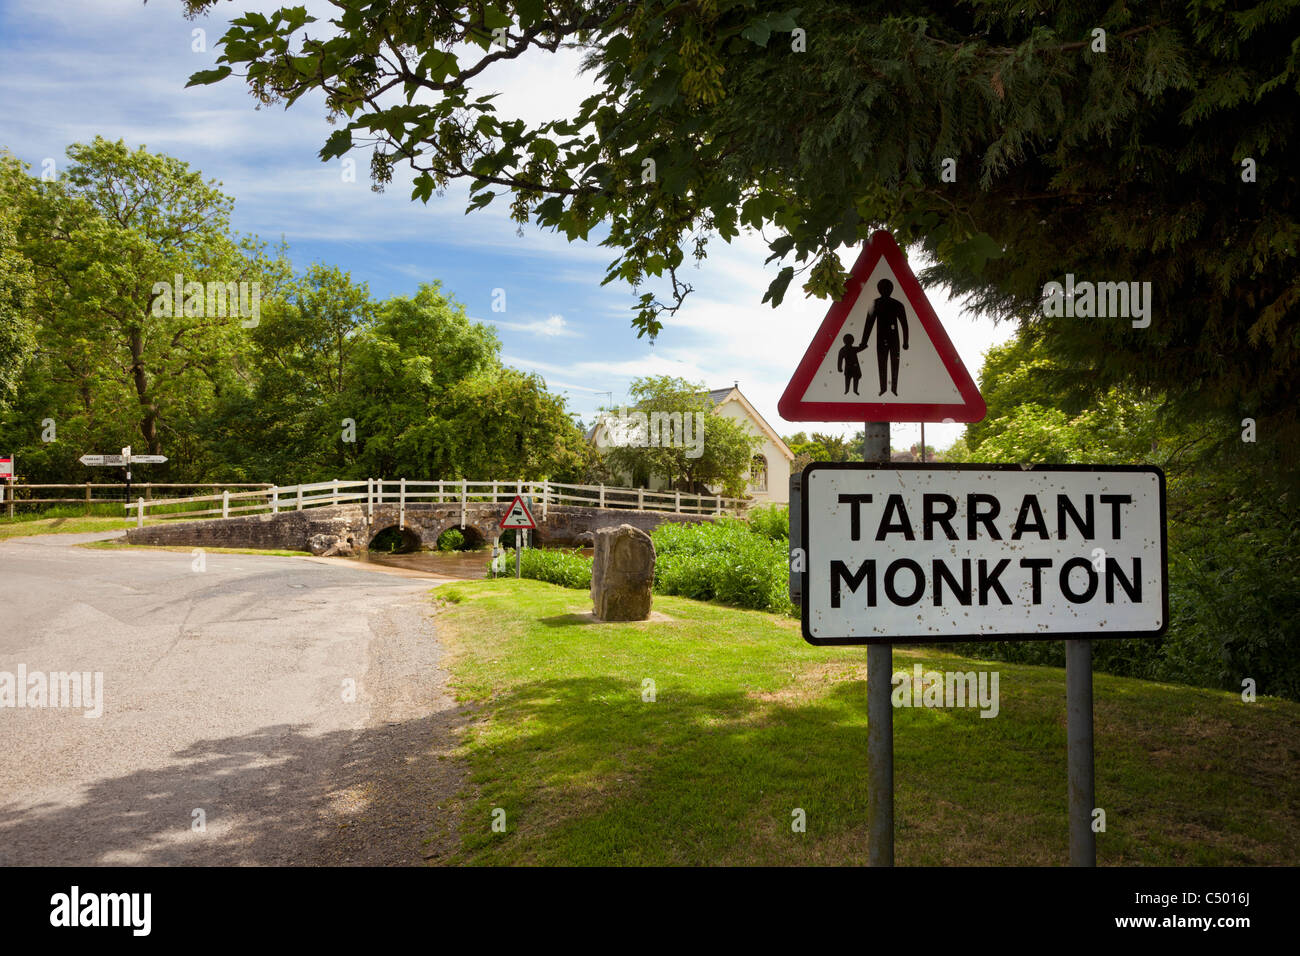 Tarrant Monkton village firmar y Ford, Dorset, Inglaterra, Reino Unido. Foto de stock